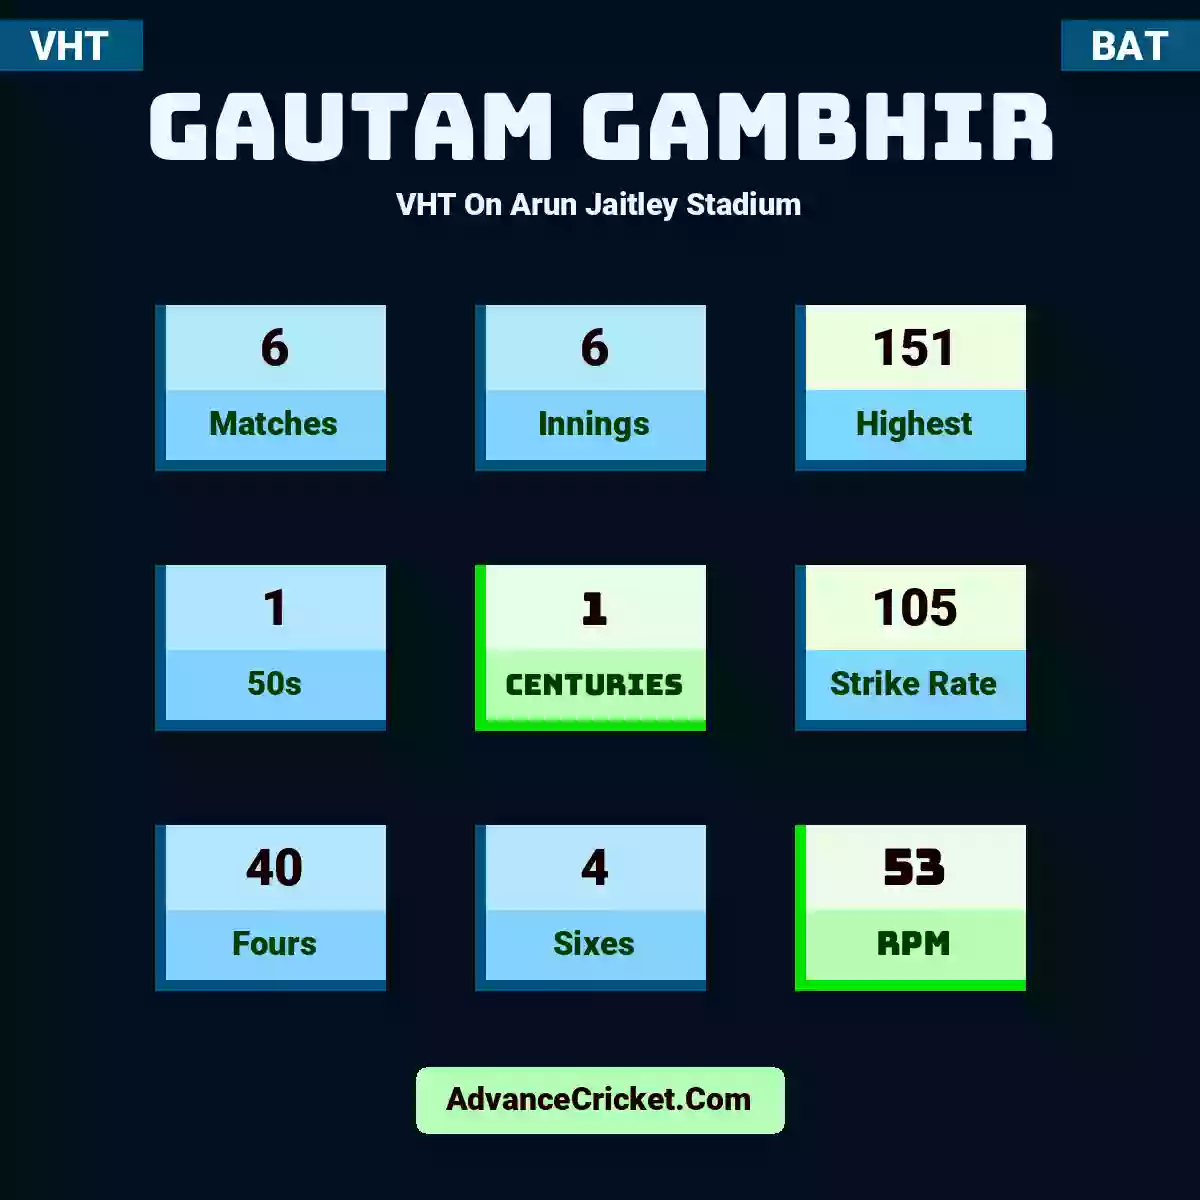 Gautam Gambhir VHT  On Arun Jaitley Stadium, Gautam Gambhir played 6 matches, scored 151 runs as highest, 1 half-centuries, and 1 centuries, with a strike rate of 105. G.Gambhir hit 40 fours and 4 sixes, with an RPM of 53.